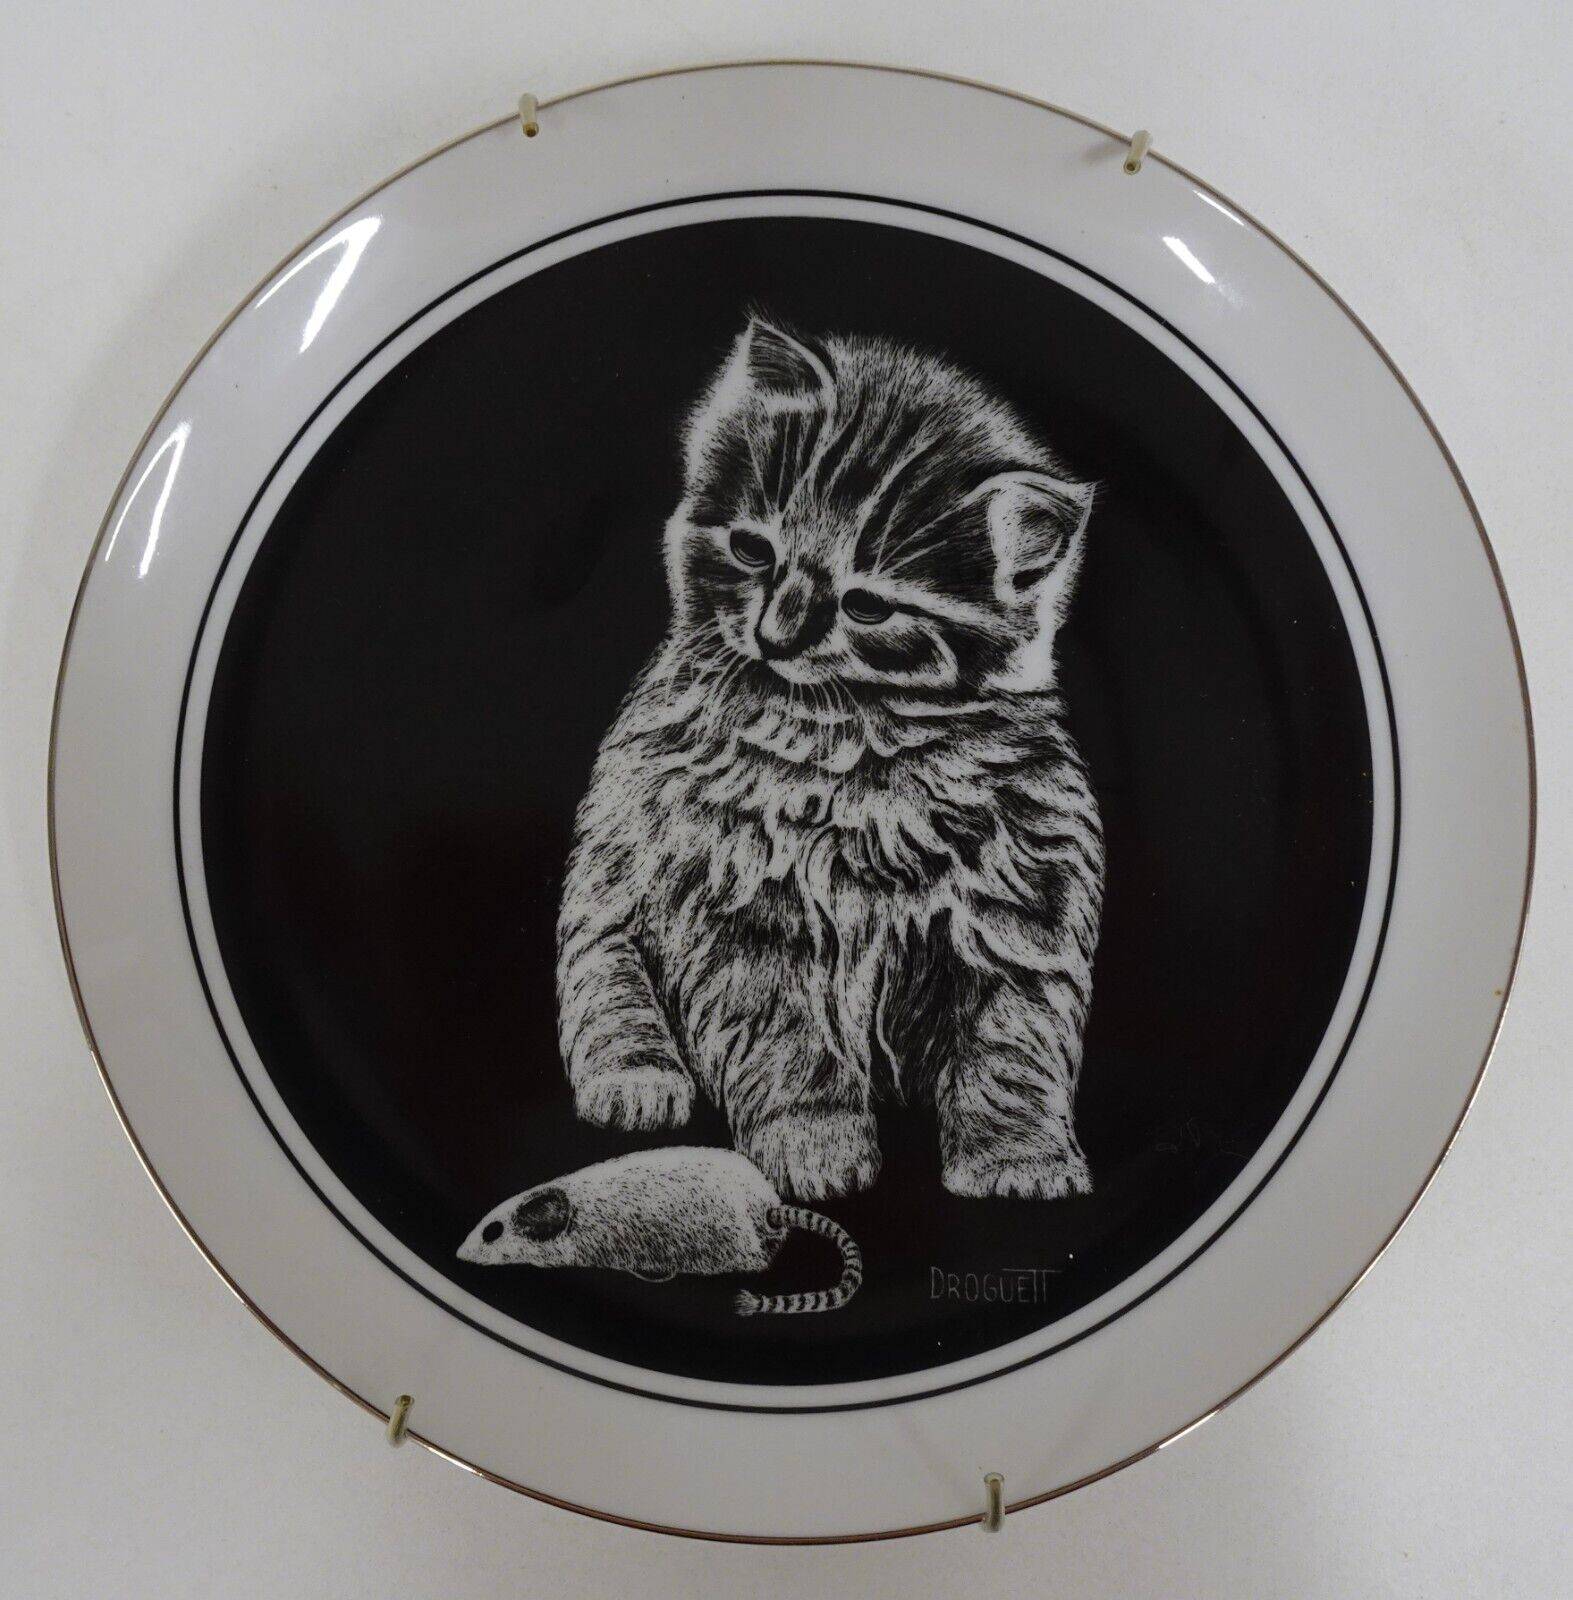 Lot 4 Kitten's World Royal Cornwall Collector Plates Droguett 1979 #1 #3 #4 #5